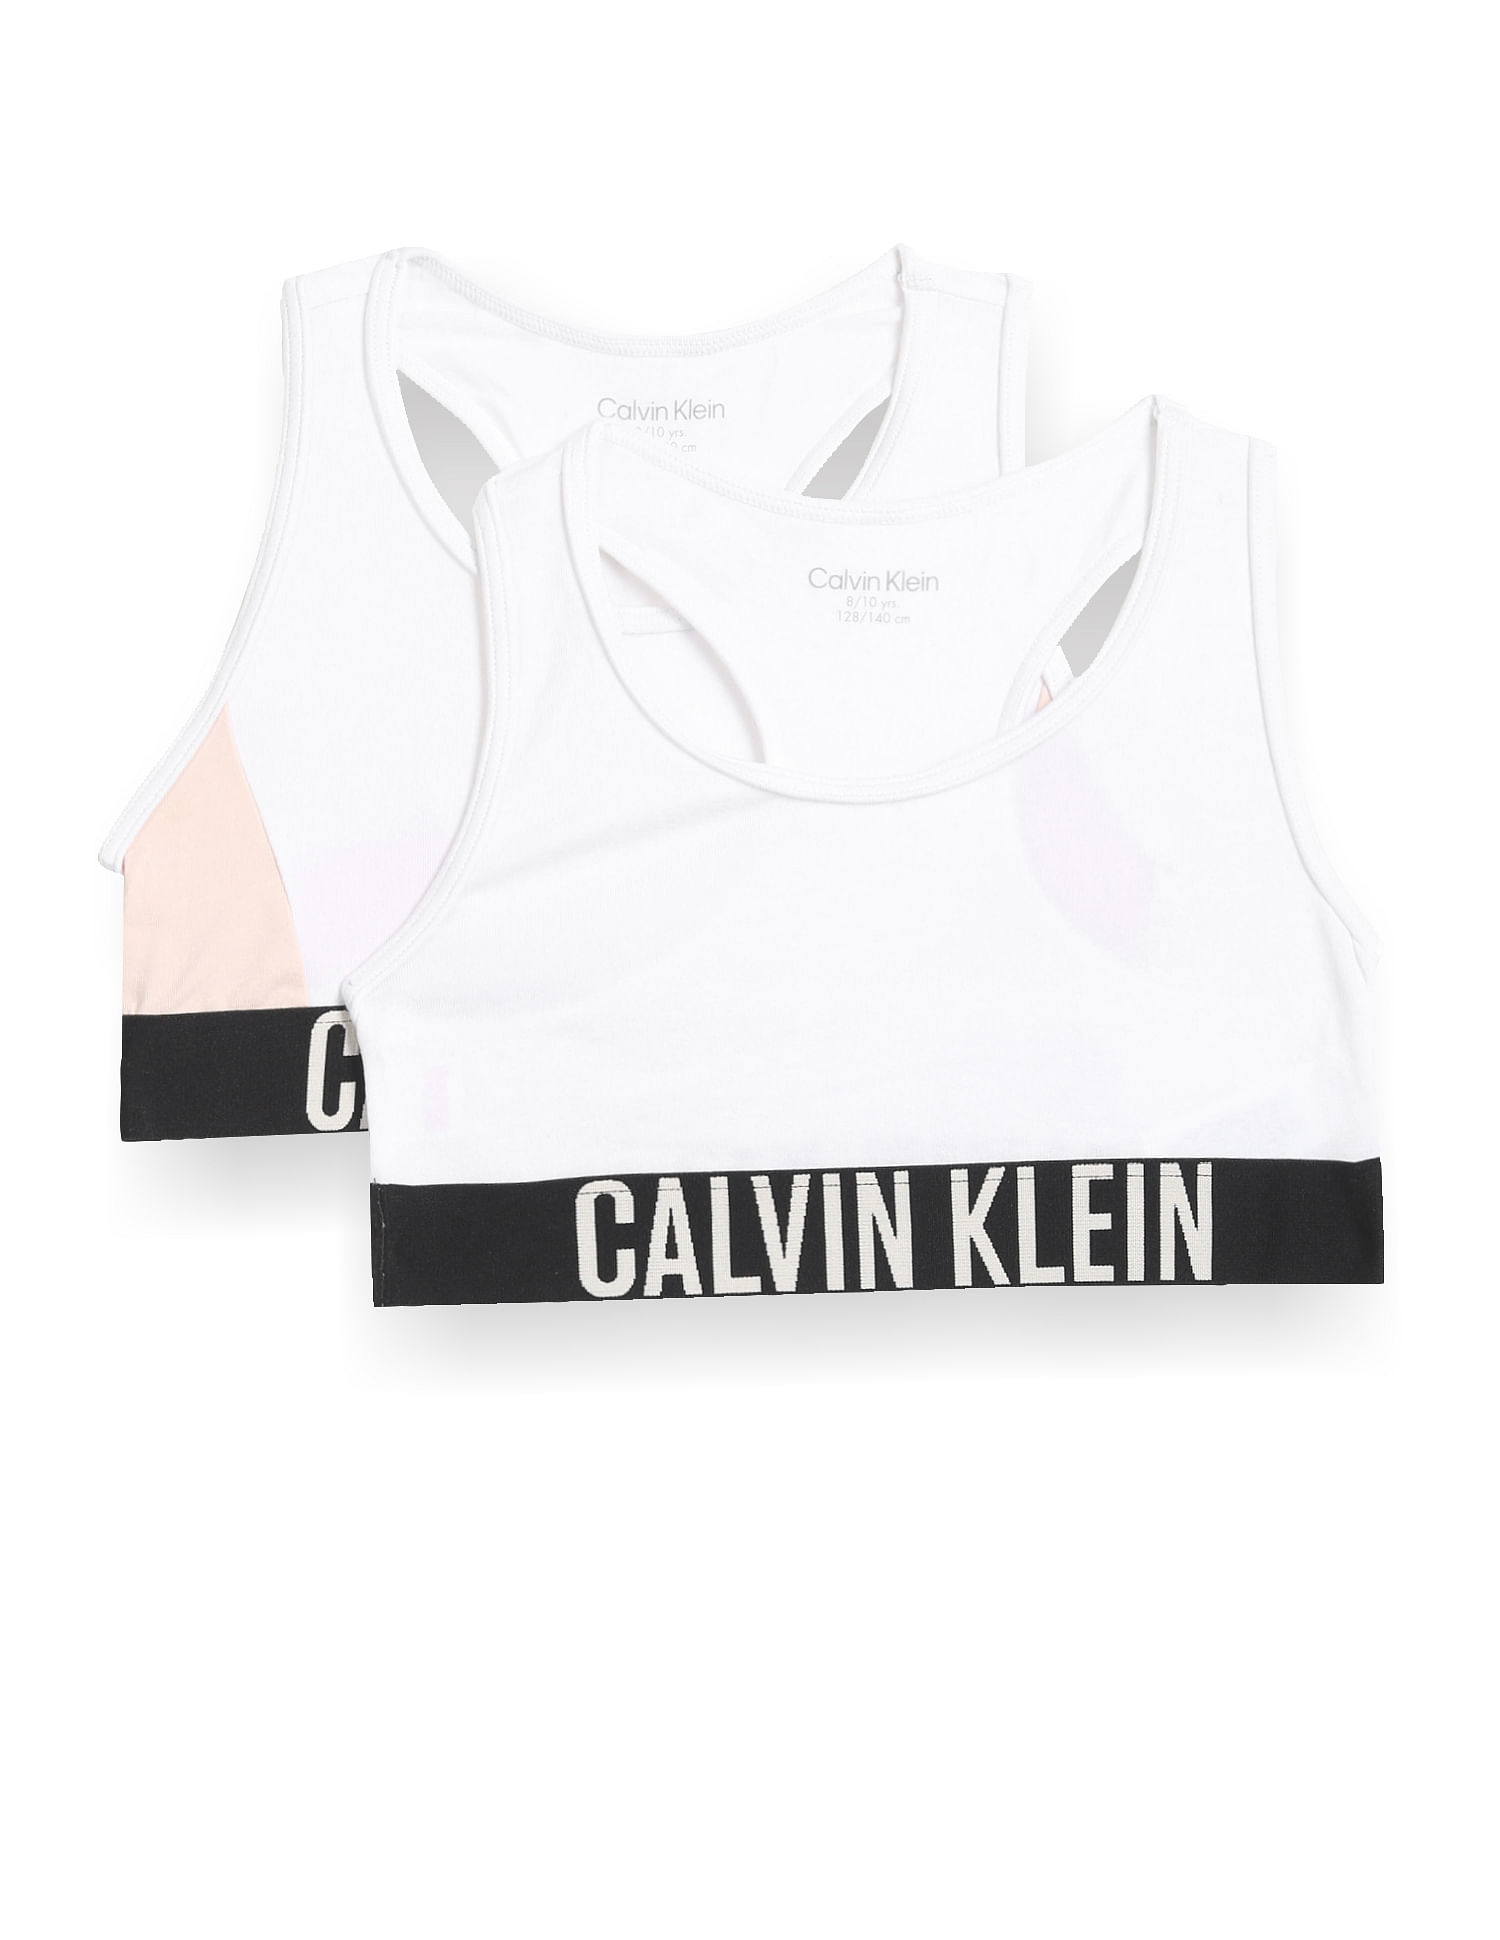 Buy Calvin Klein Underwear Girls Solid Racer Back Bralette - Pack